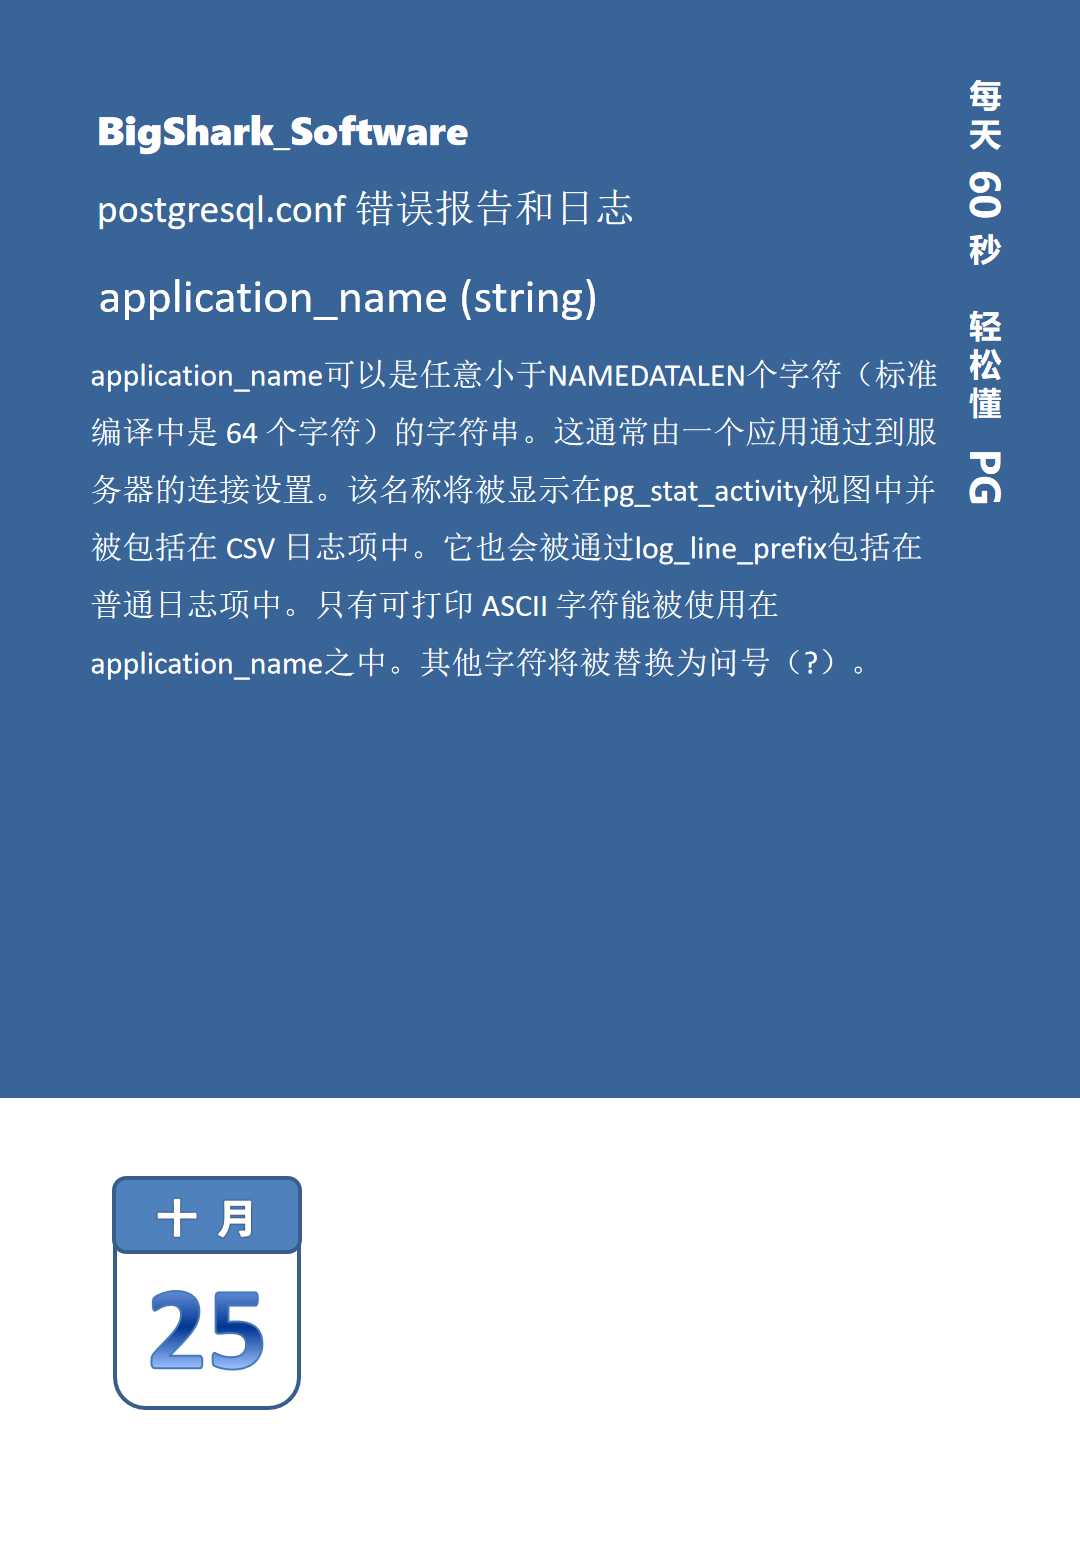 postgresql.conf application_name